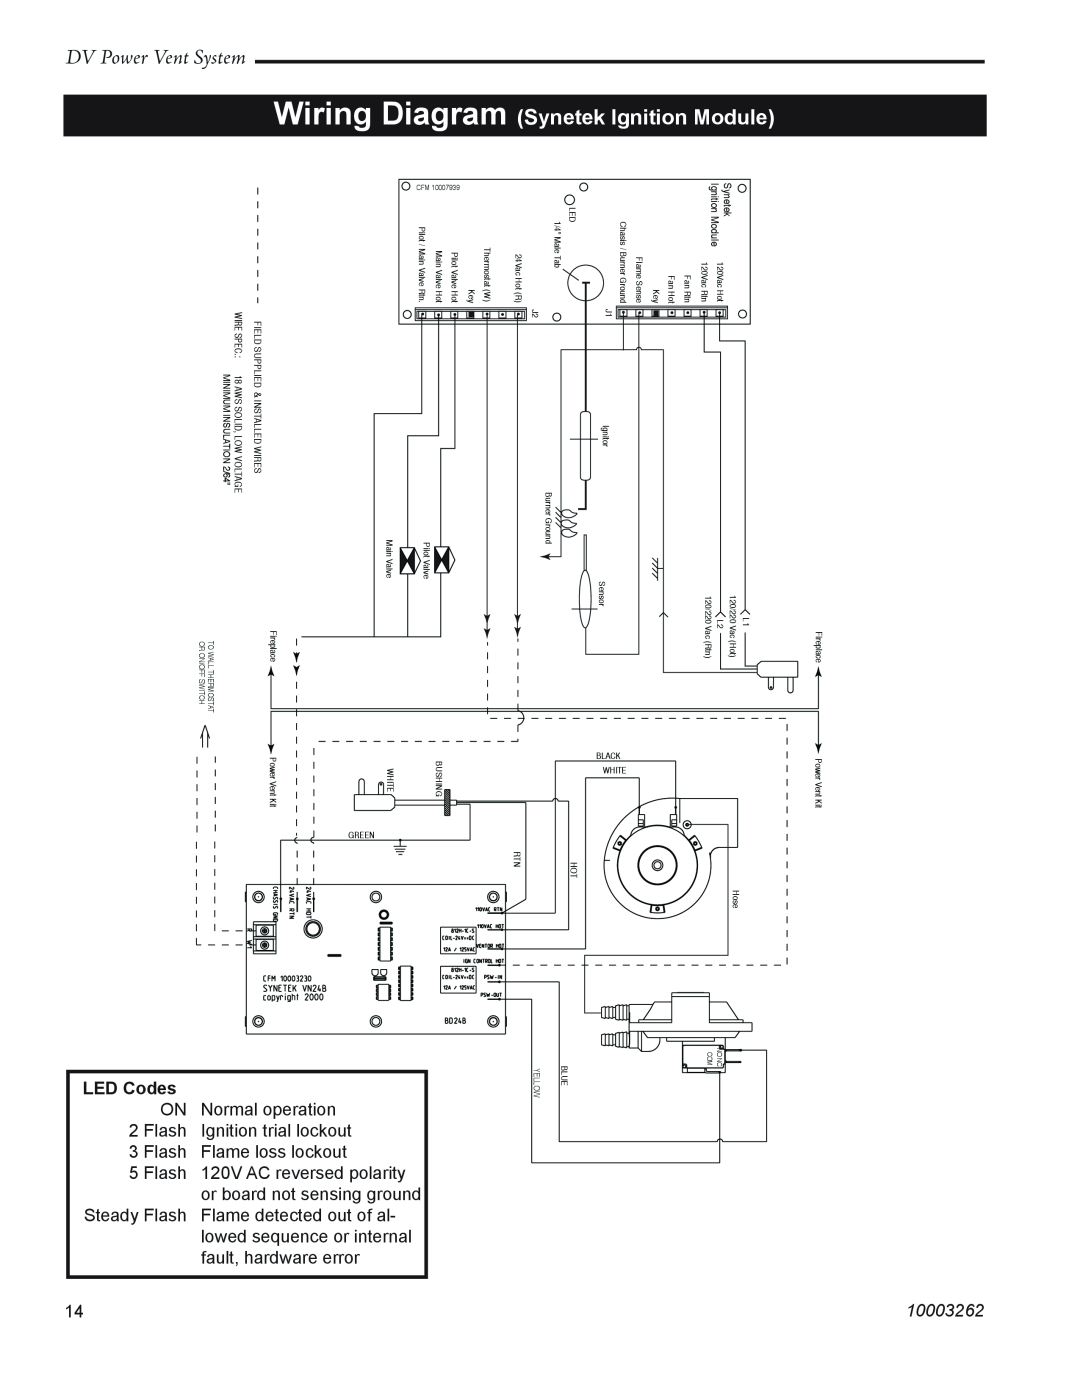 Vermont Casting 7PDVS manual Wiring Diagram Synetek Ignition Module, DV Power Vent System, LED Codes, 10003262 